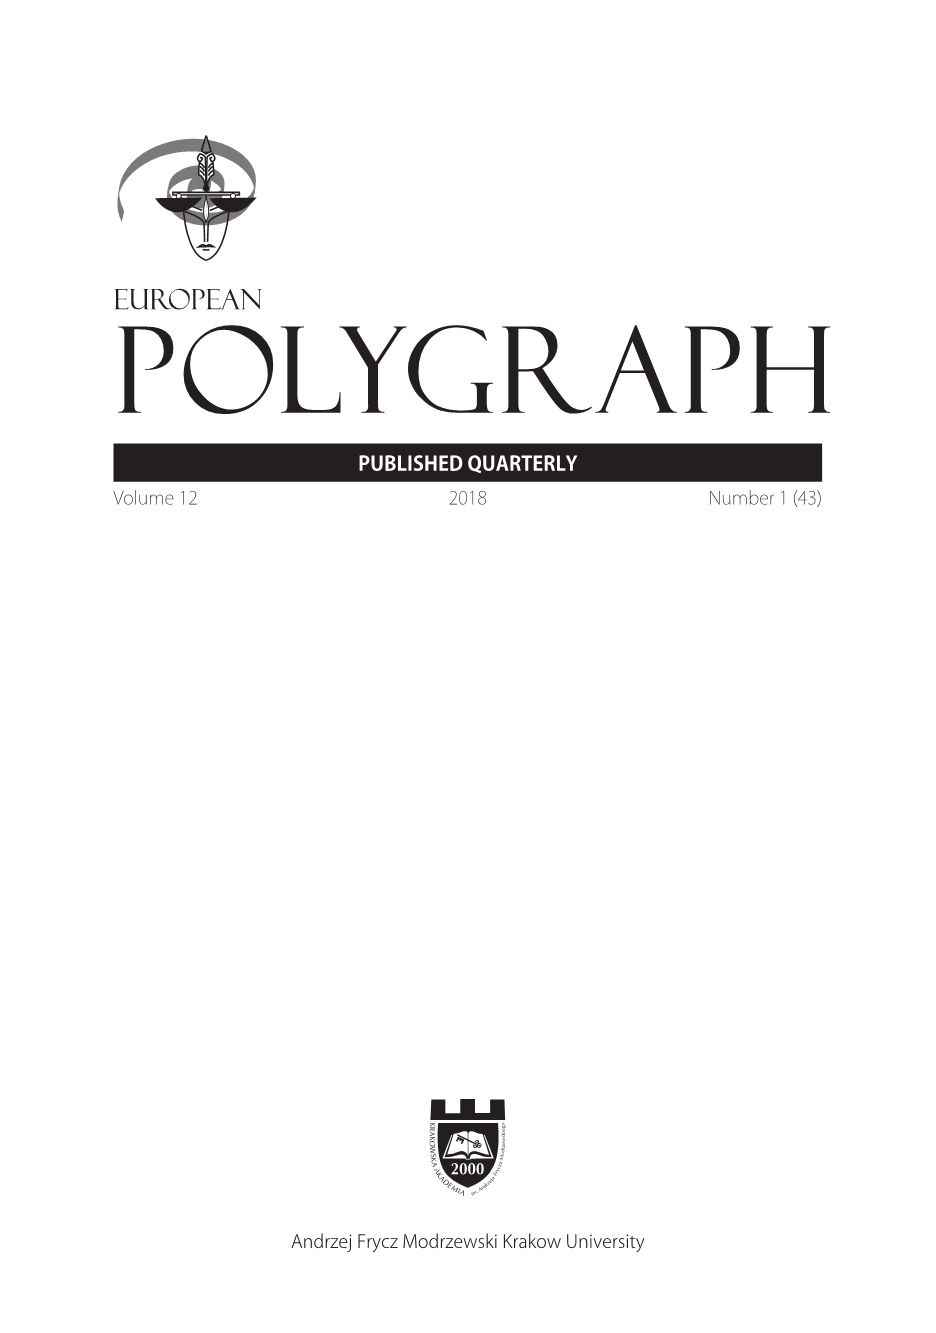 James Q. Murdoch: How to Pass a Polygraph, San Bernardino 2018, 23 pp. Cover Image